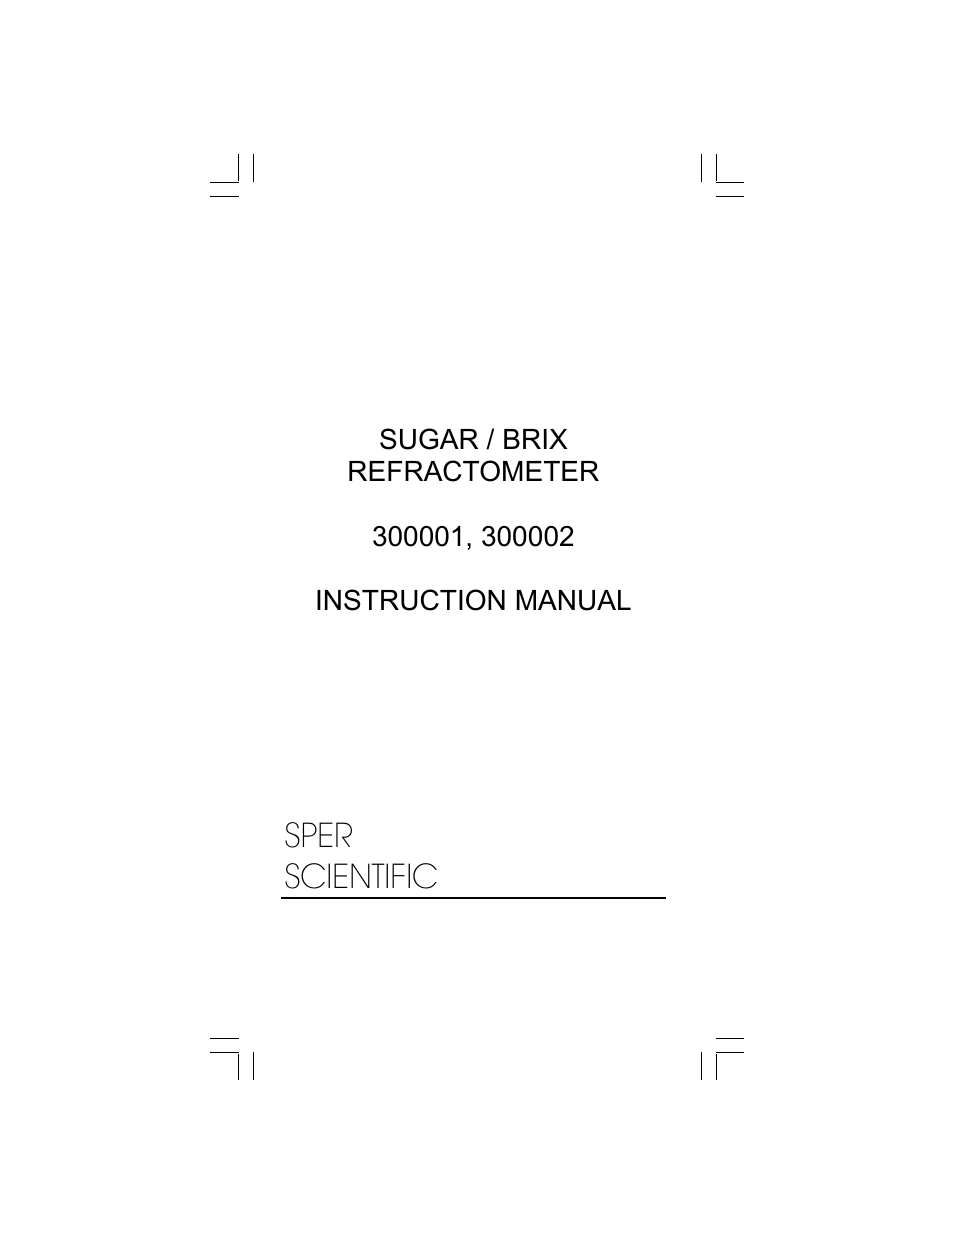 300002 Refractometer - Sugar Brix 28-62%